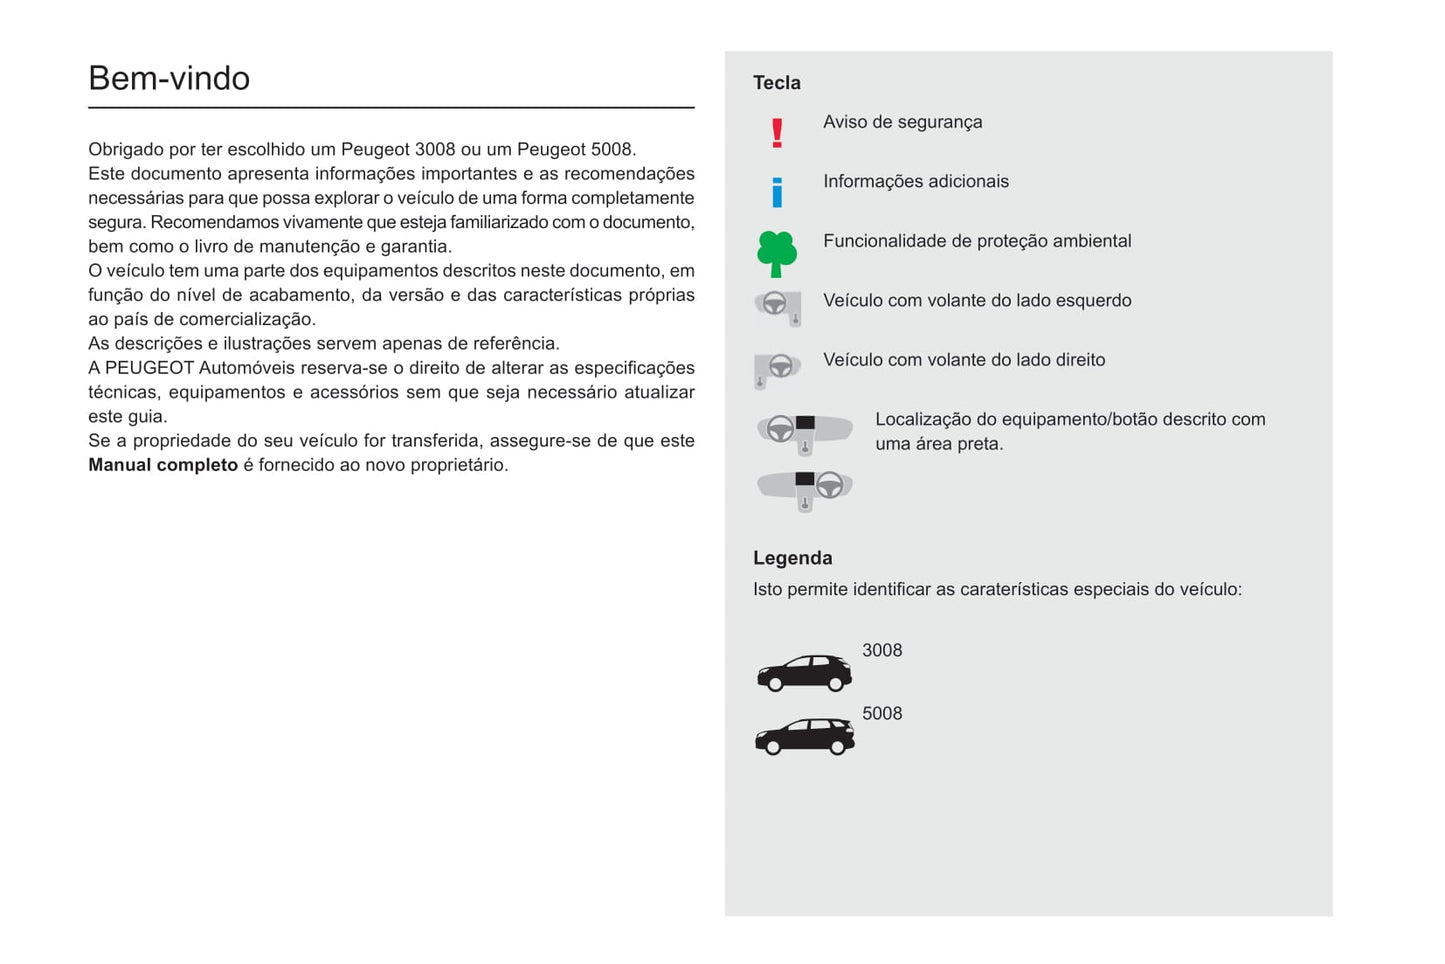 2019-2020 Peugeot 3008/5008 Gebruikershandleiding | Português